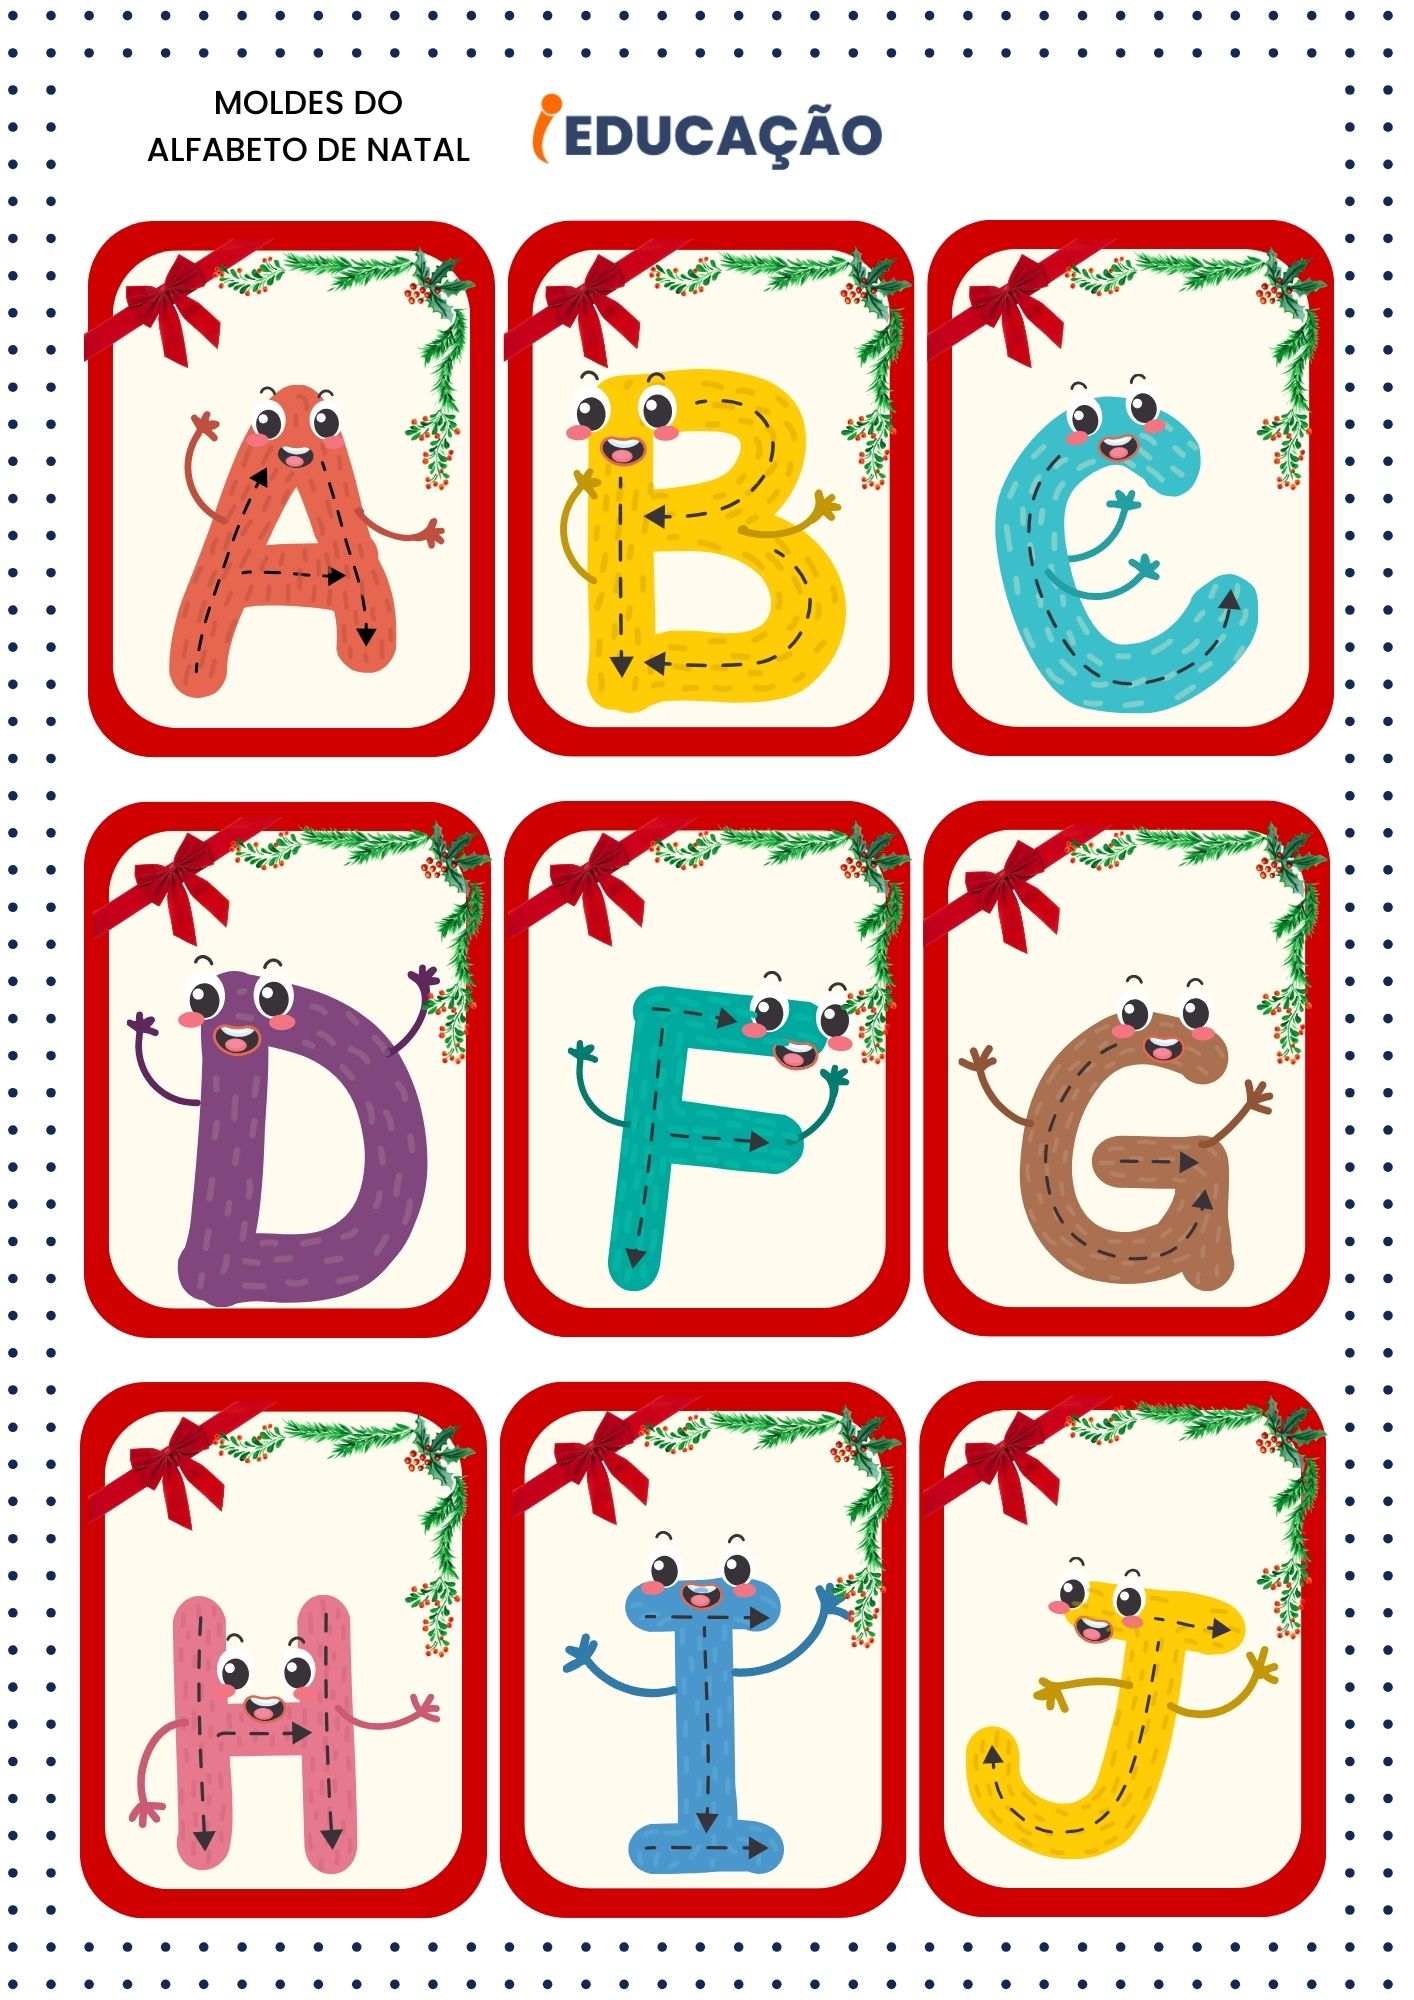 Alfabeto natalino- letras abc.jpg